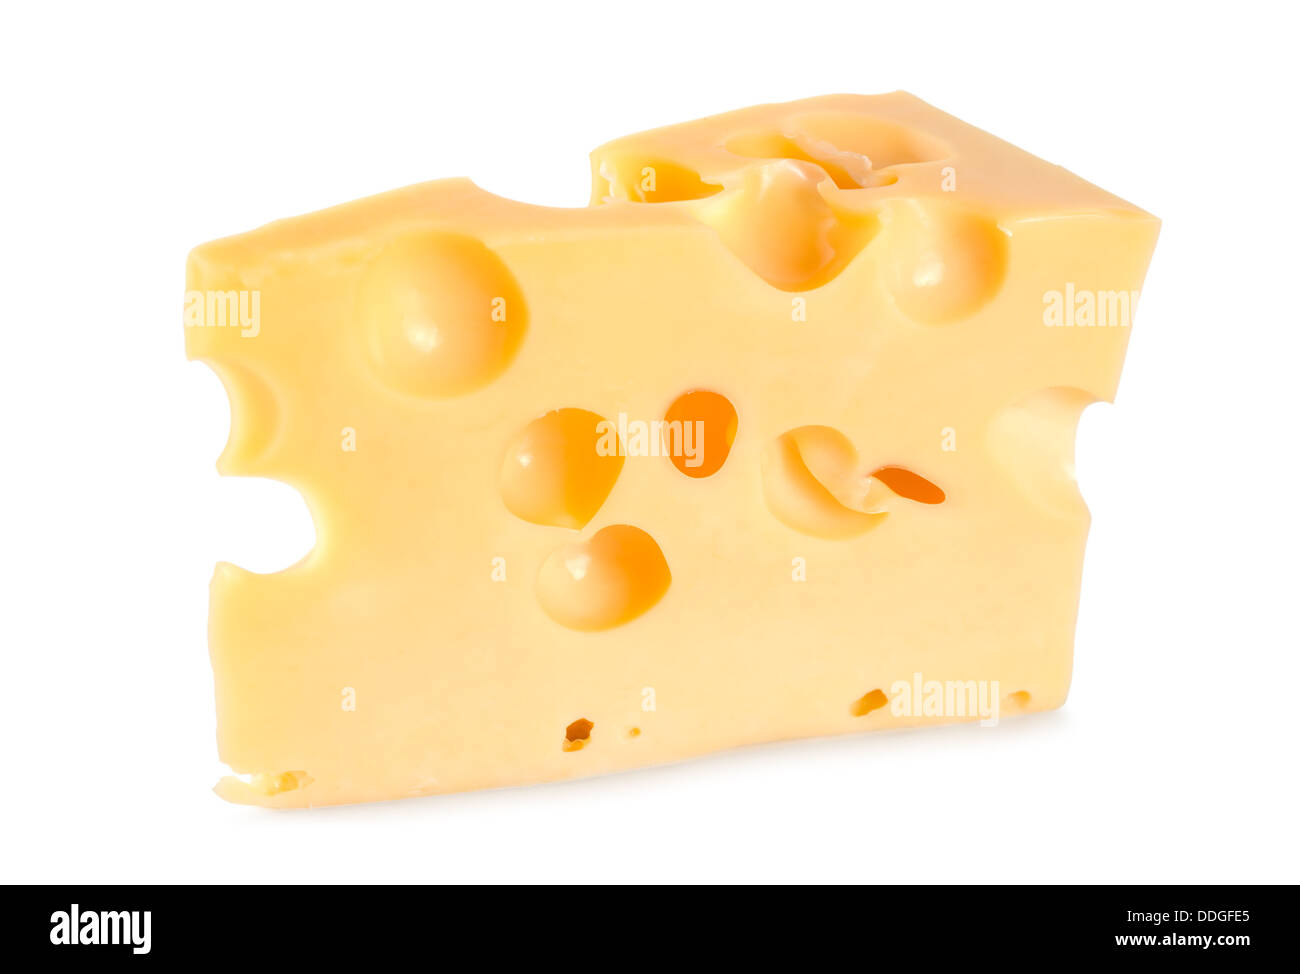 Dutch farmer's cheese isolated Stock Photo